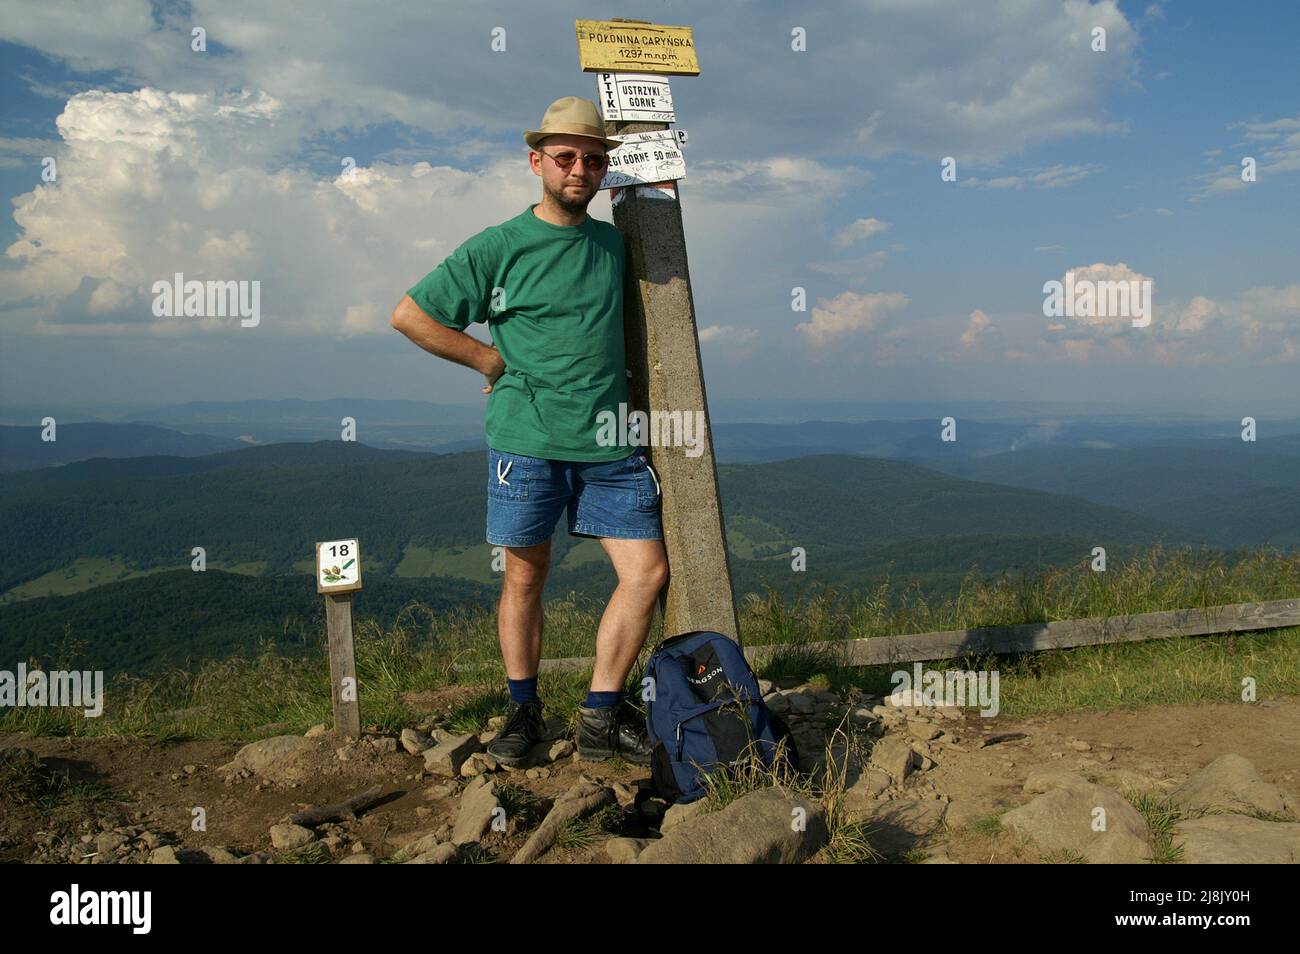 Połonina Caryńska, Bieszczady, Poland, Polen, Polska; Hiker wanderer in the mountains on the trail. Wanderer in den Bergen auf der Spur. Turysta góry Stock Photo